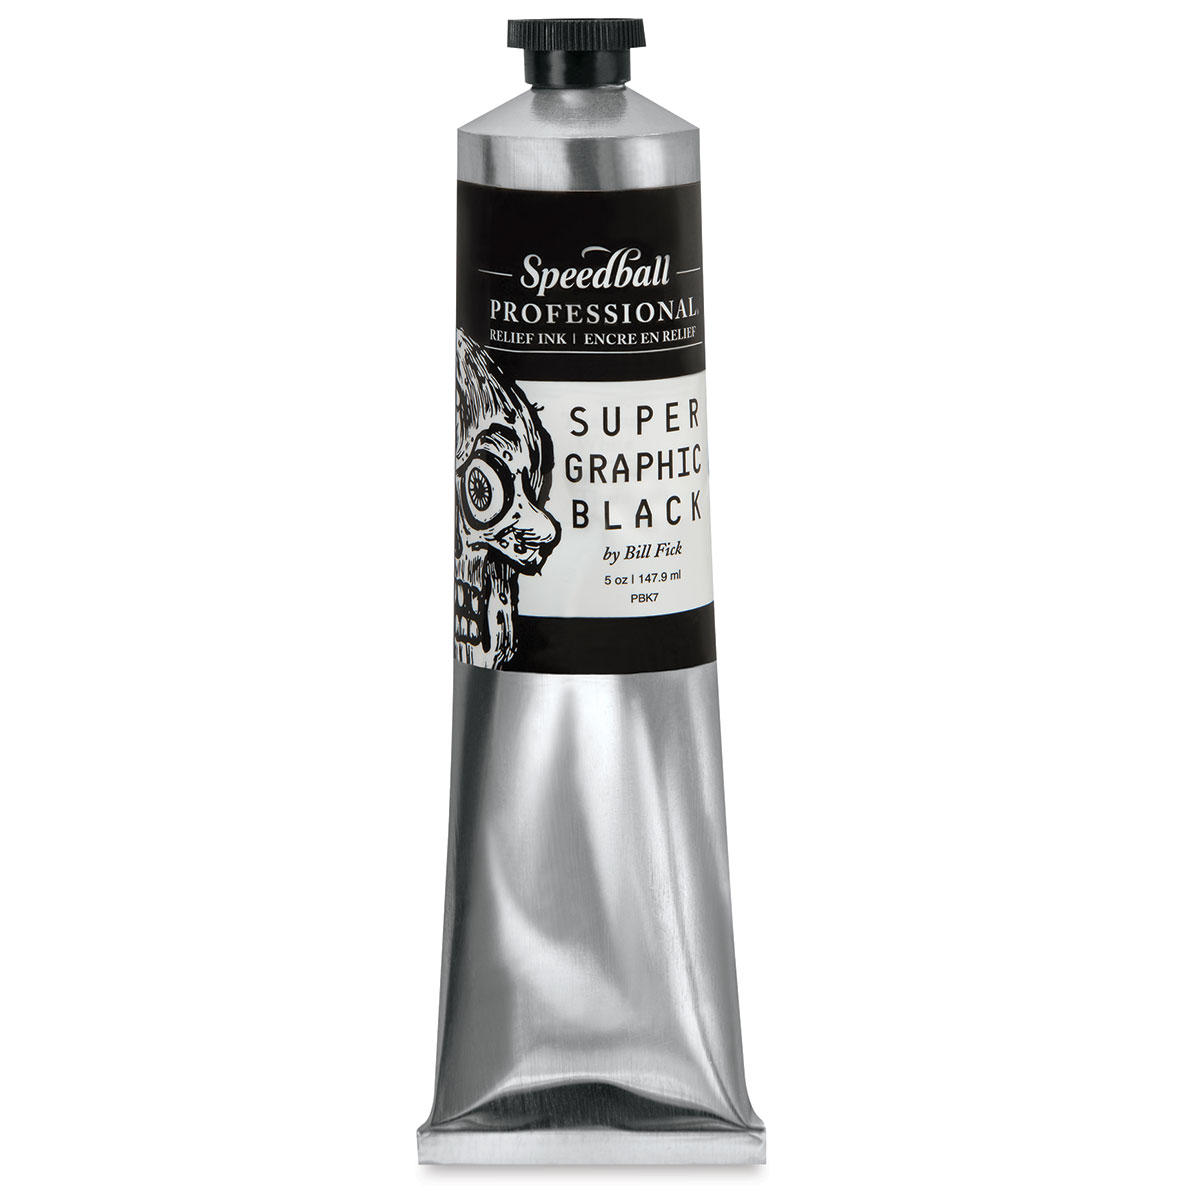 Speedball Professional Relief Ink - Supergraphic Black, 5 oz, Tube